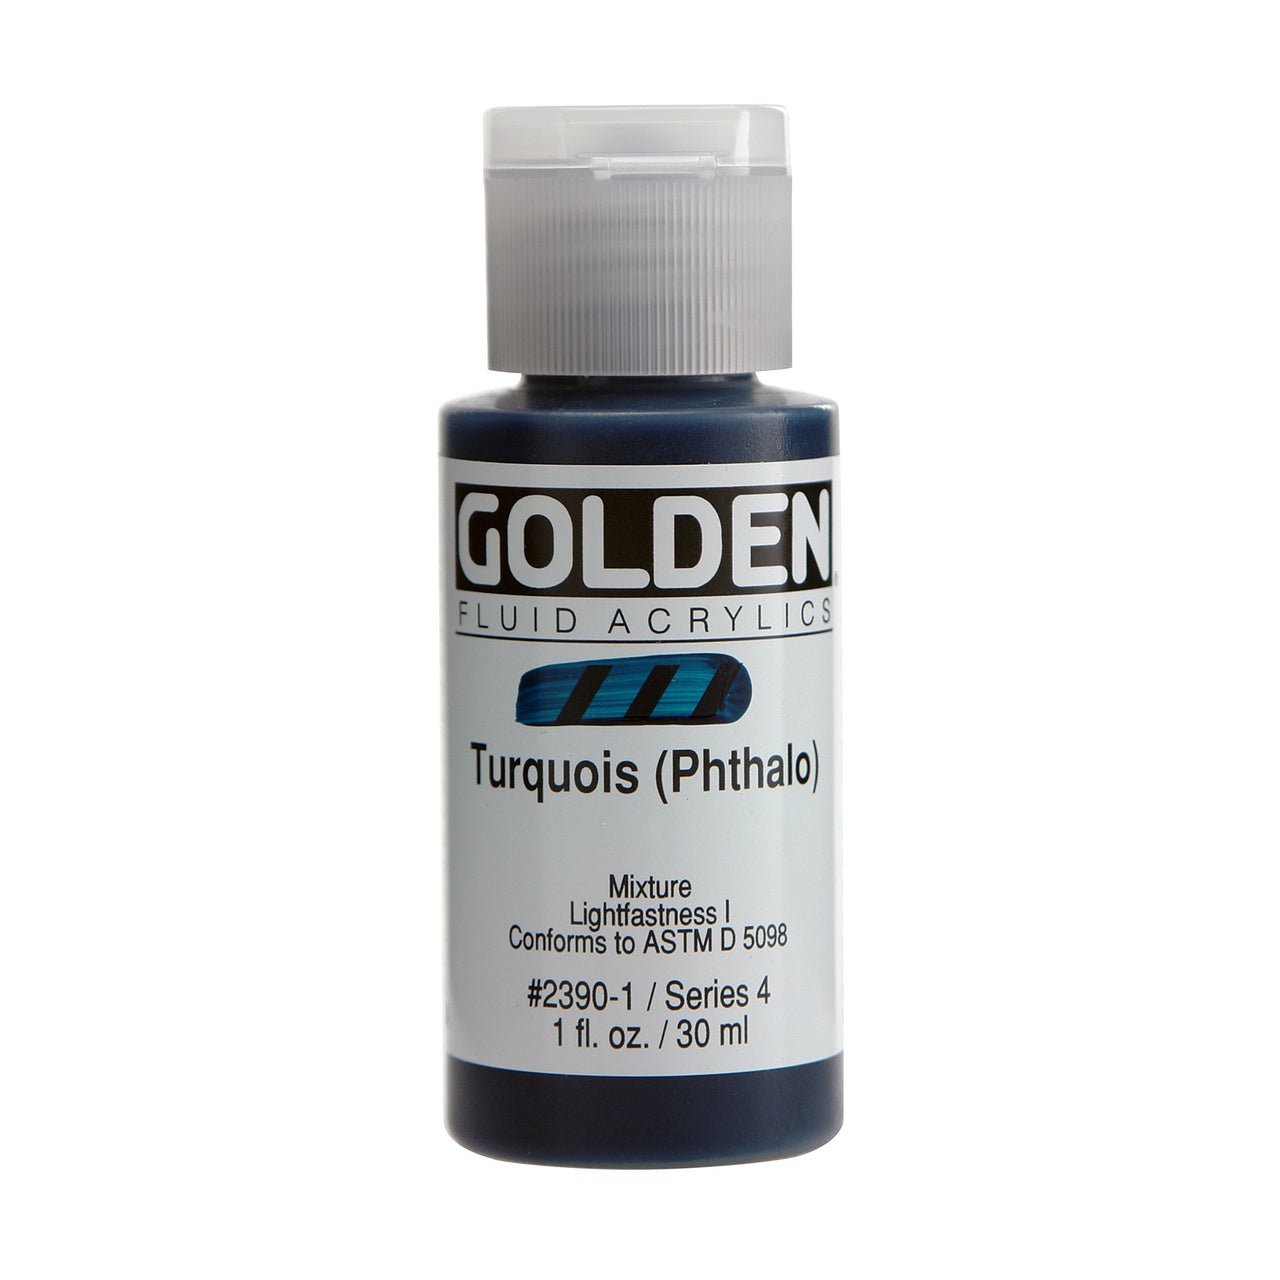 Golden Fluid Acrylic Turquoise (Phthalo) 1 oz - merriartist.com